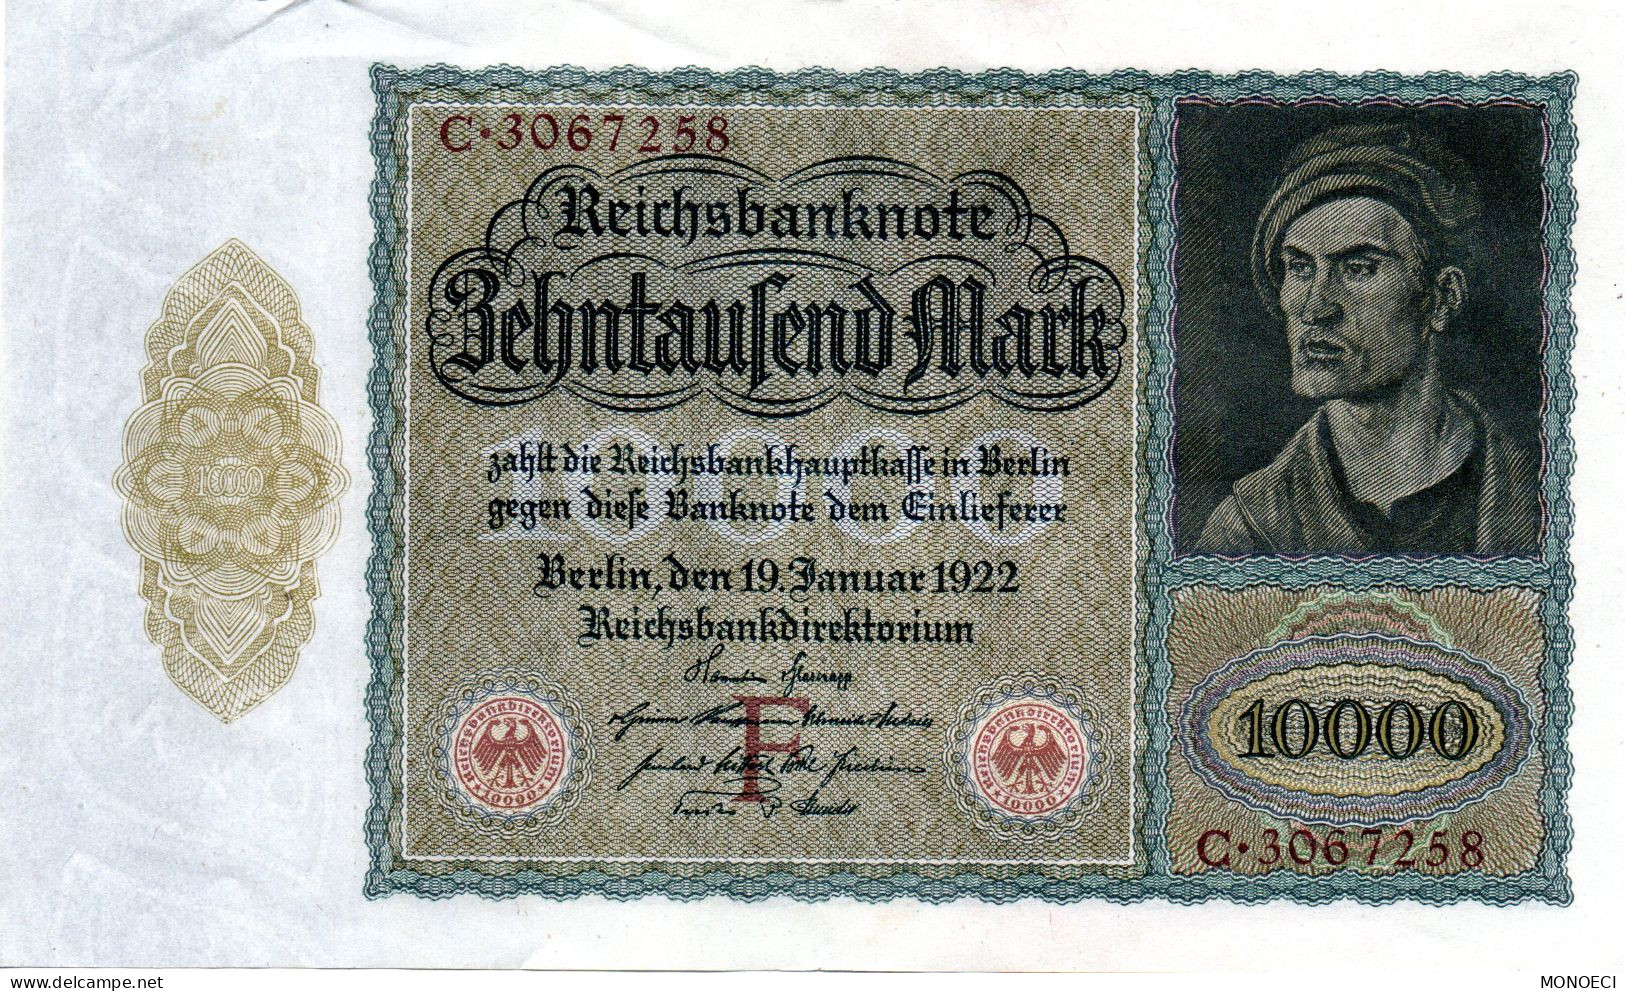 ALLEMAGNE -- Reichsbanknote -- 10.000 Mark Berlin, Den 19 Januar 1922 - 10000 Mark